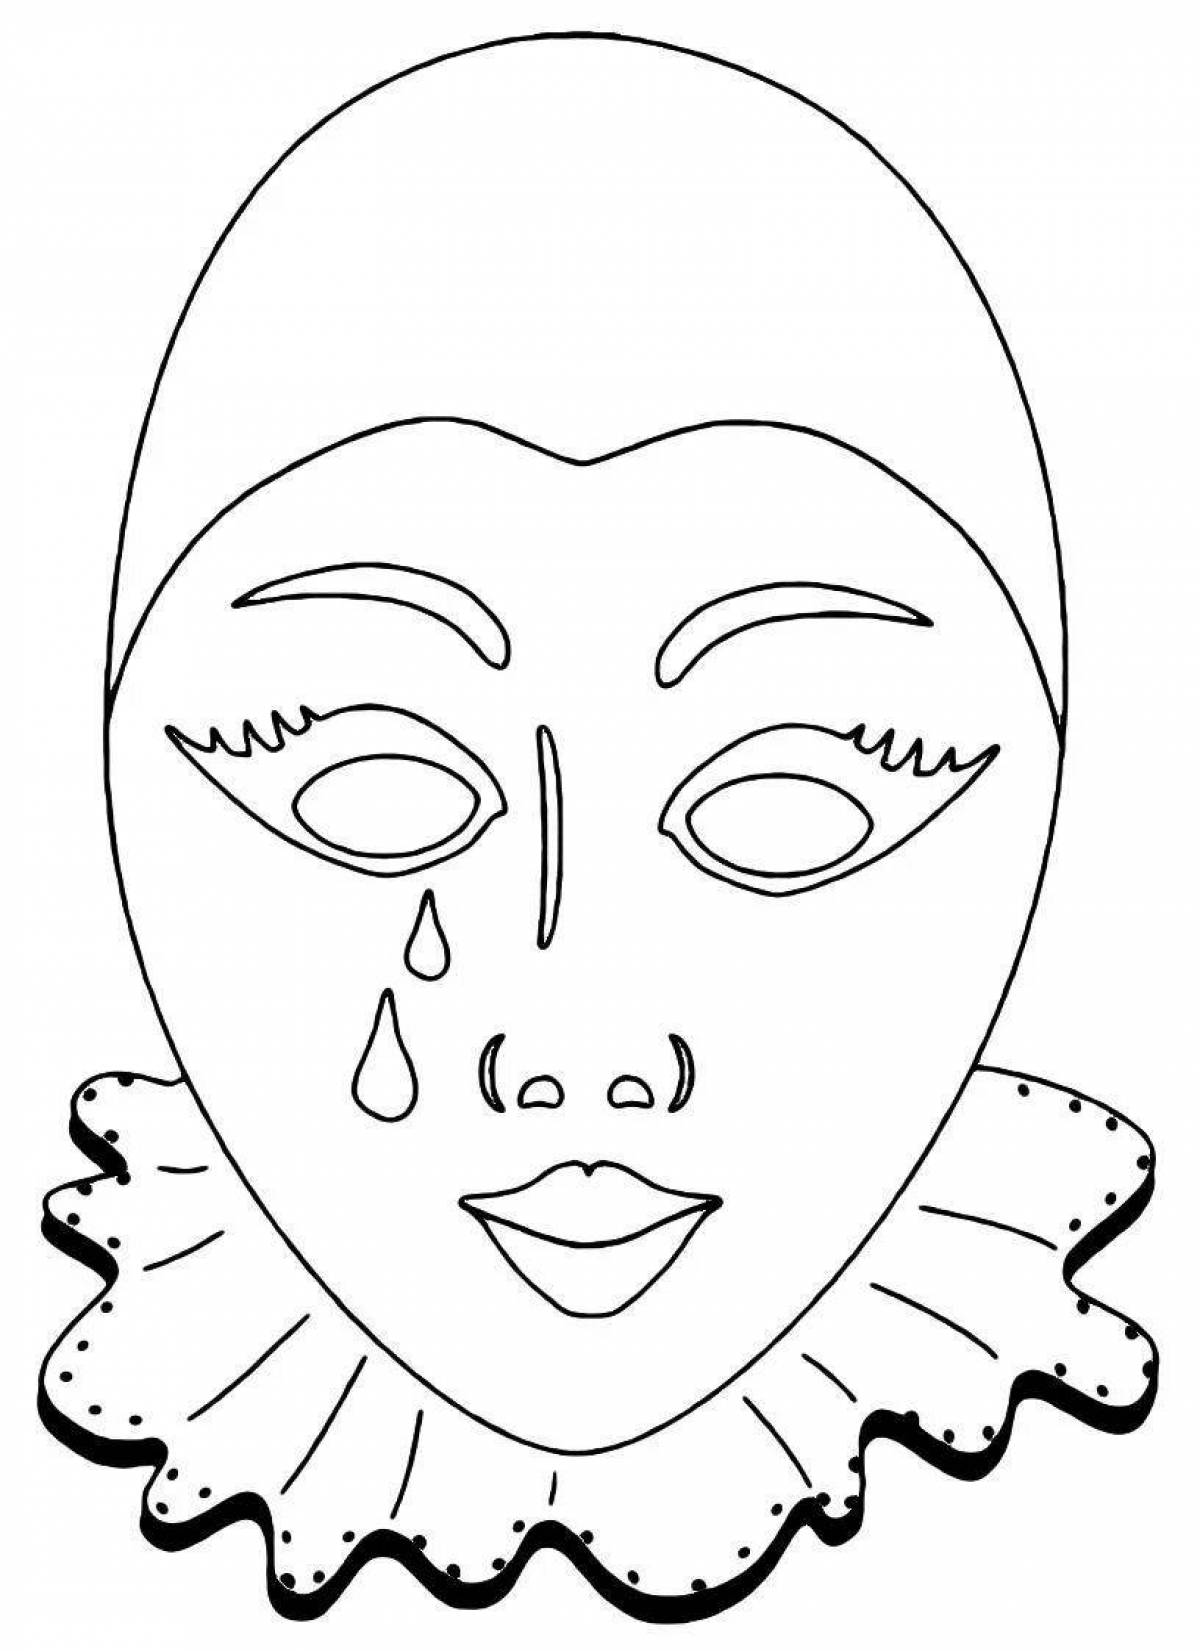 Coloring sheet magical face mask